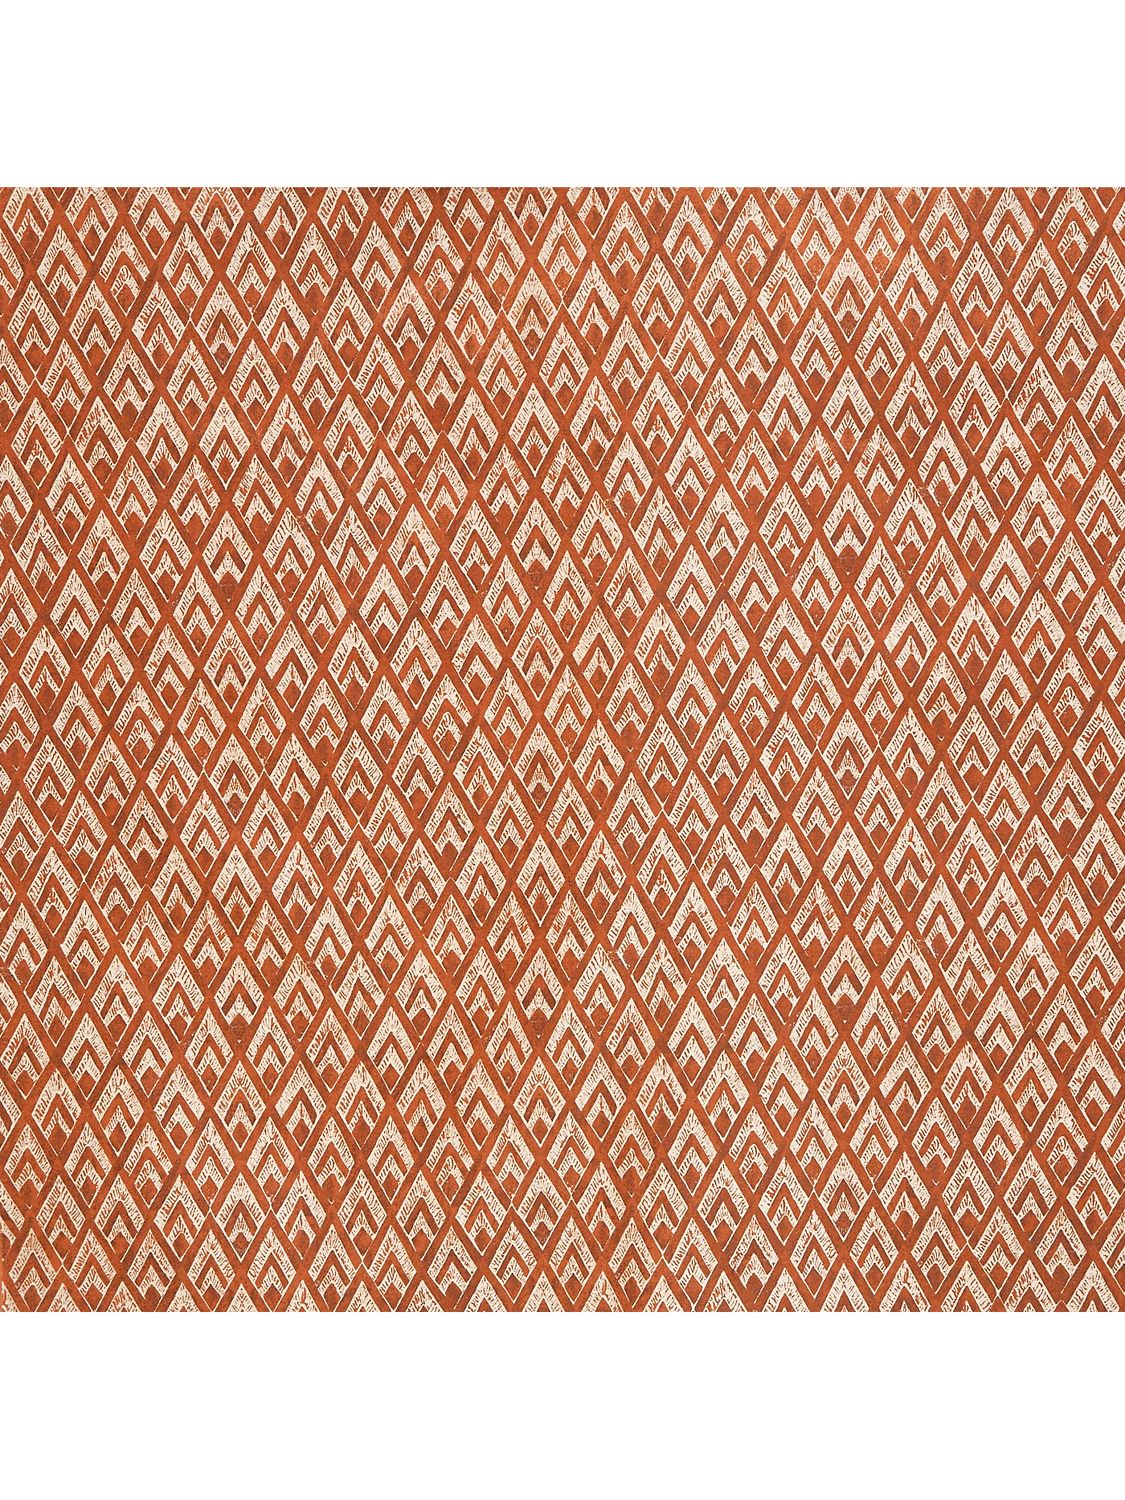 Prestigious Textiles Pyramid Furnishing Fabric, Ginger